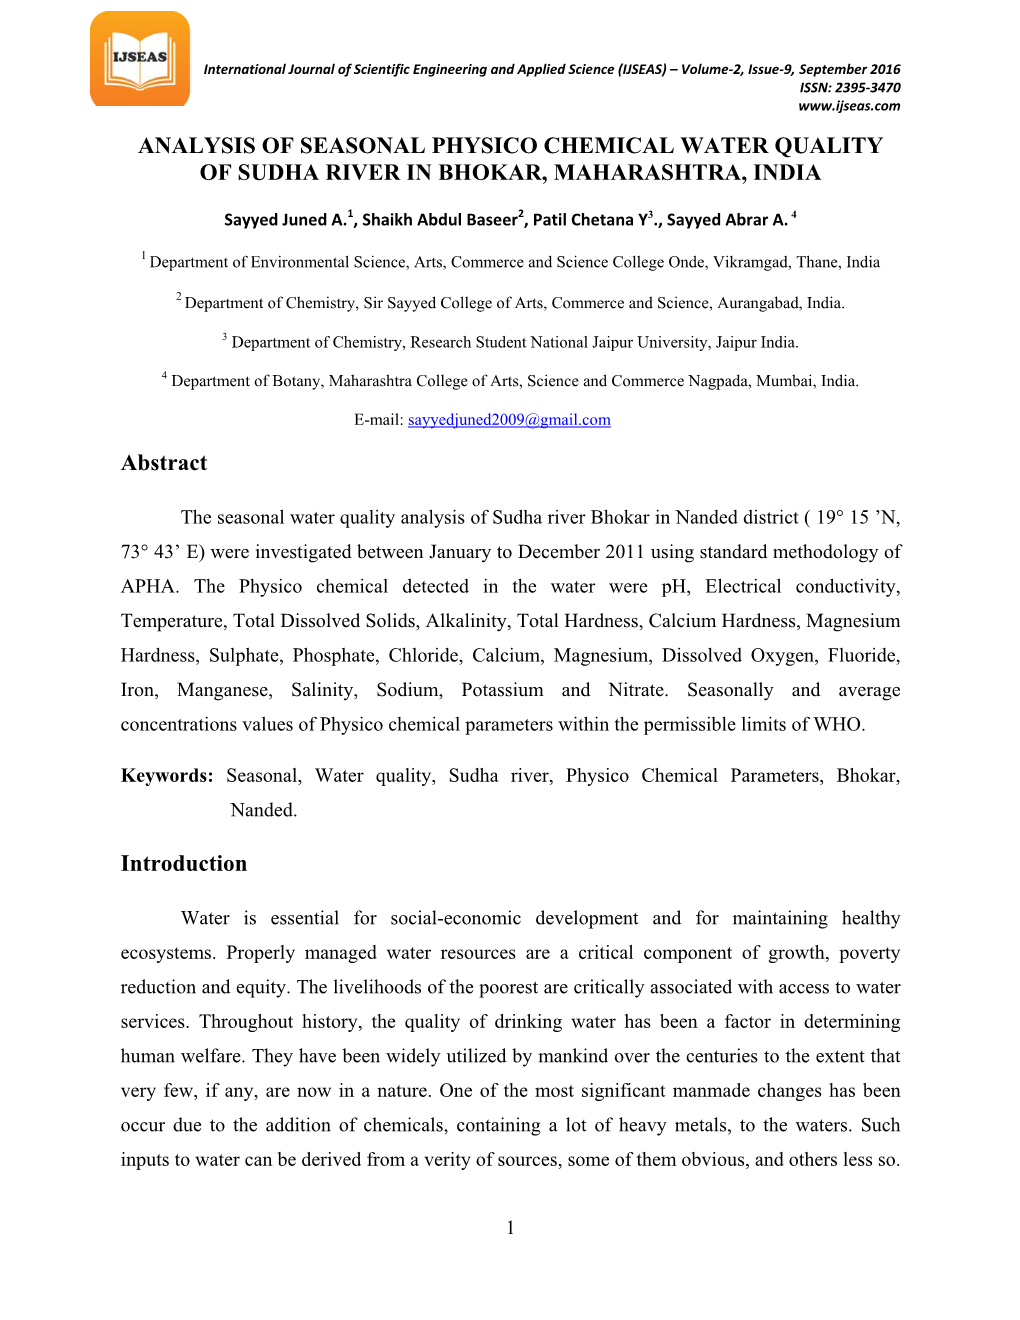 Analysis of Seasonal Physico Chemical Water Quality of Sudha River in Bhokar, Maharashtra, India